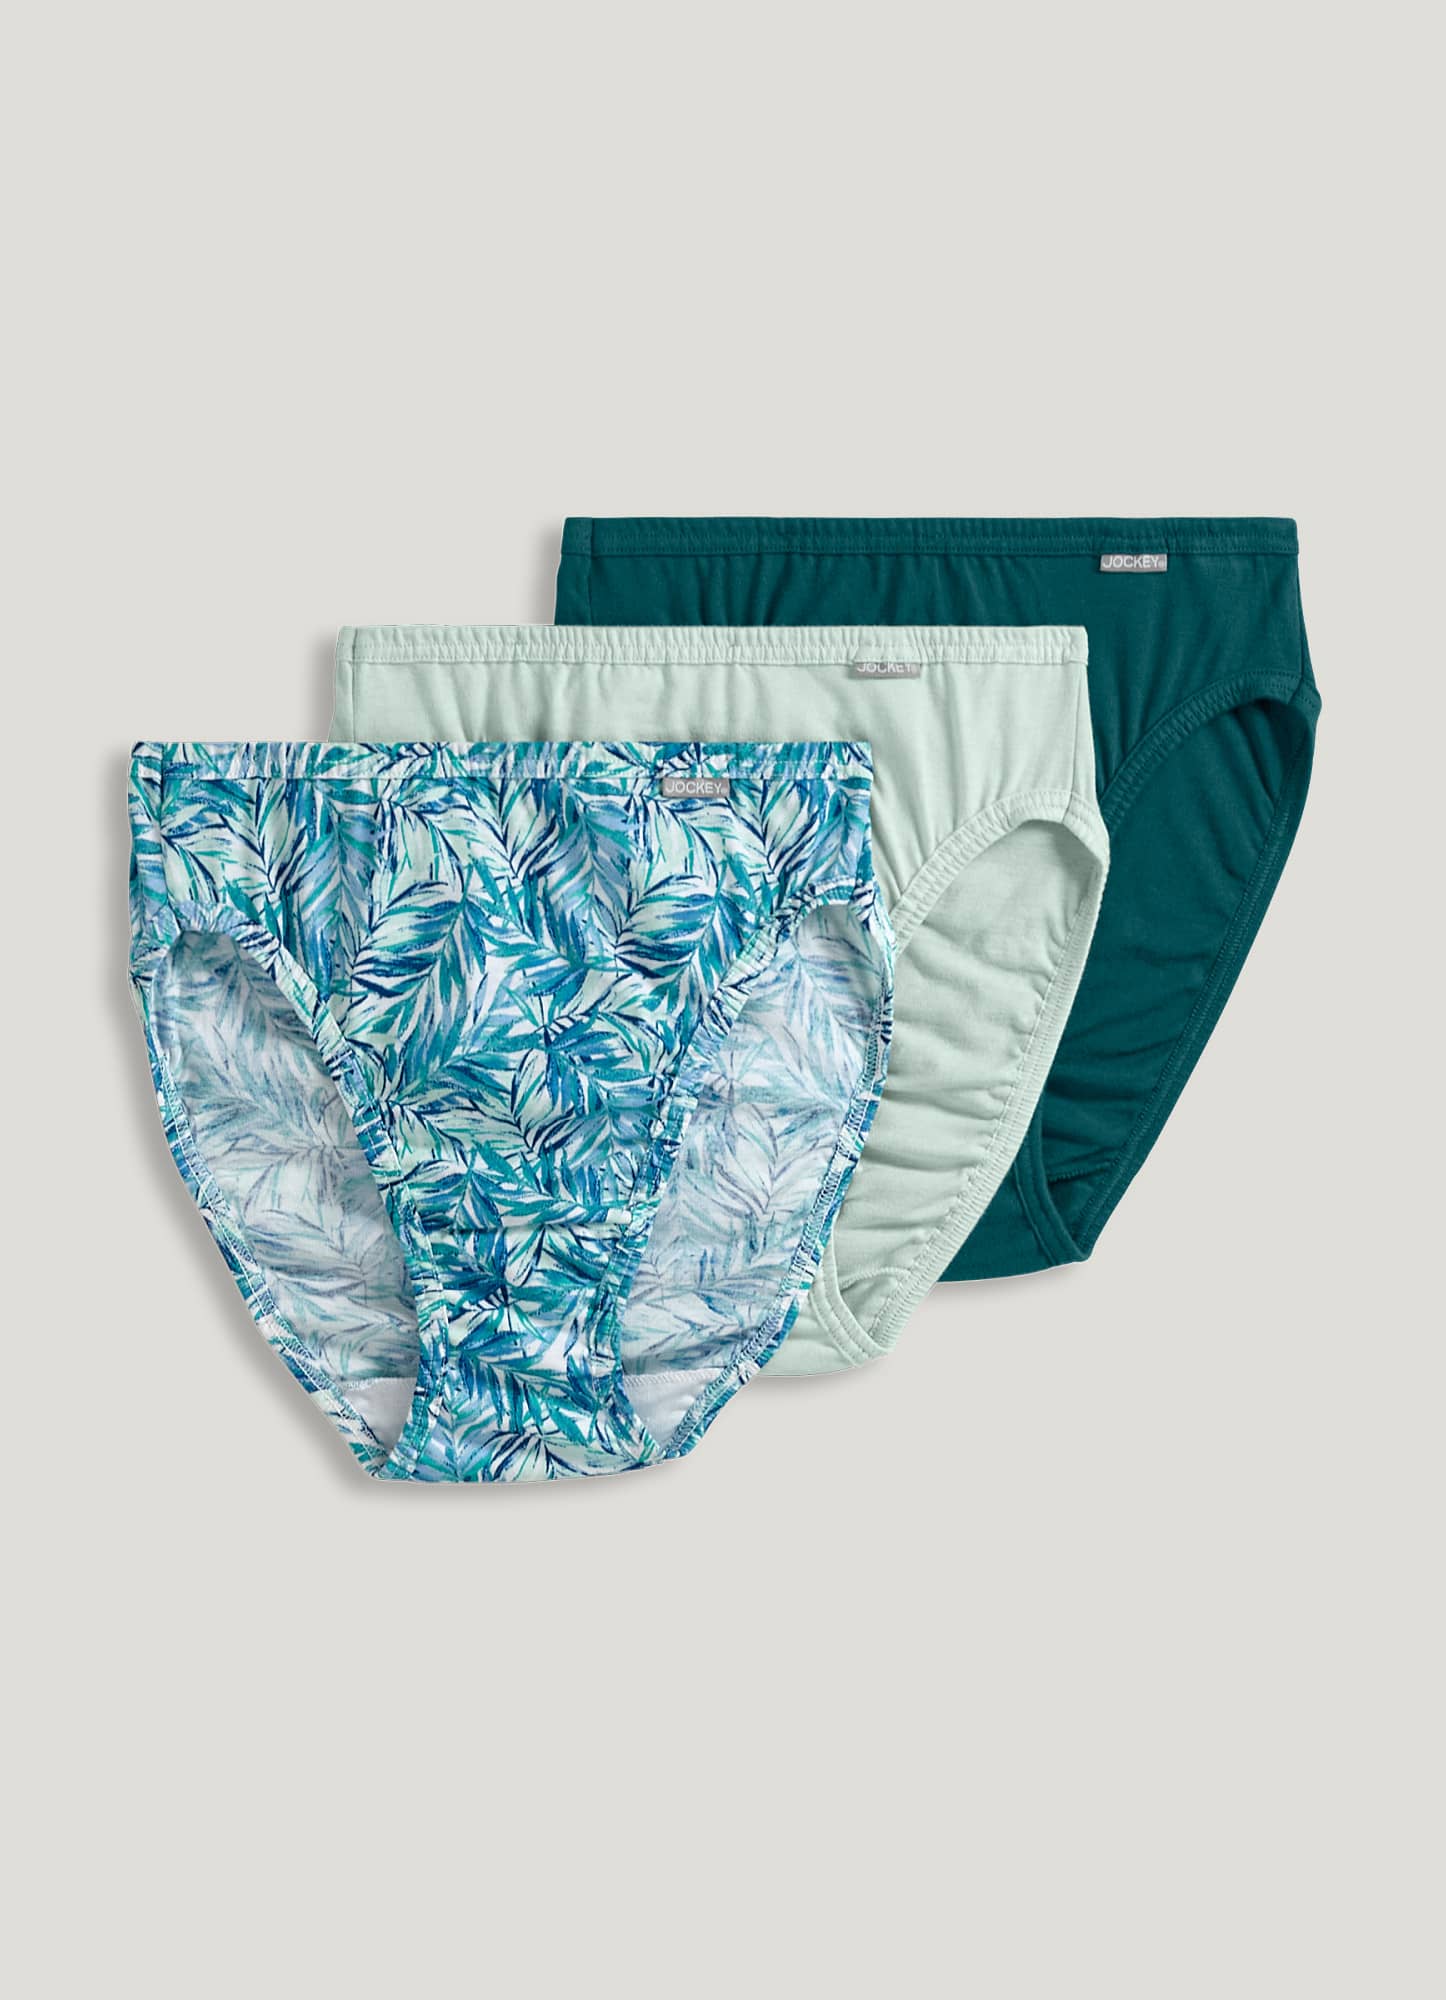 New Jockey Women's size 7 Underwear Elance Cotton Briefs Cut 3 Pack Coral  Tropic 